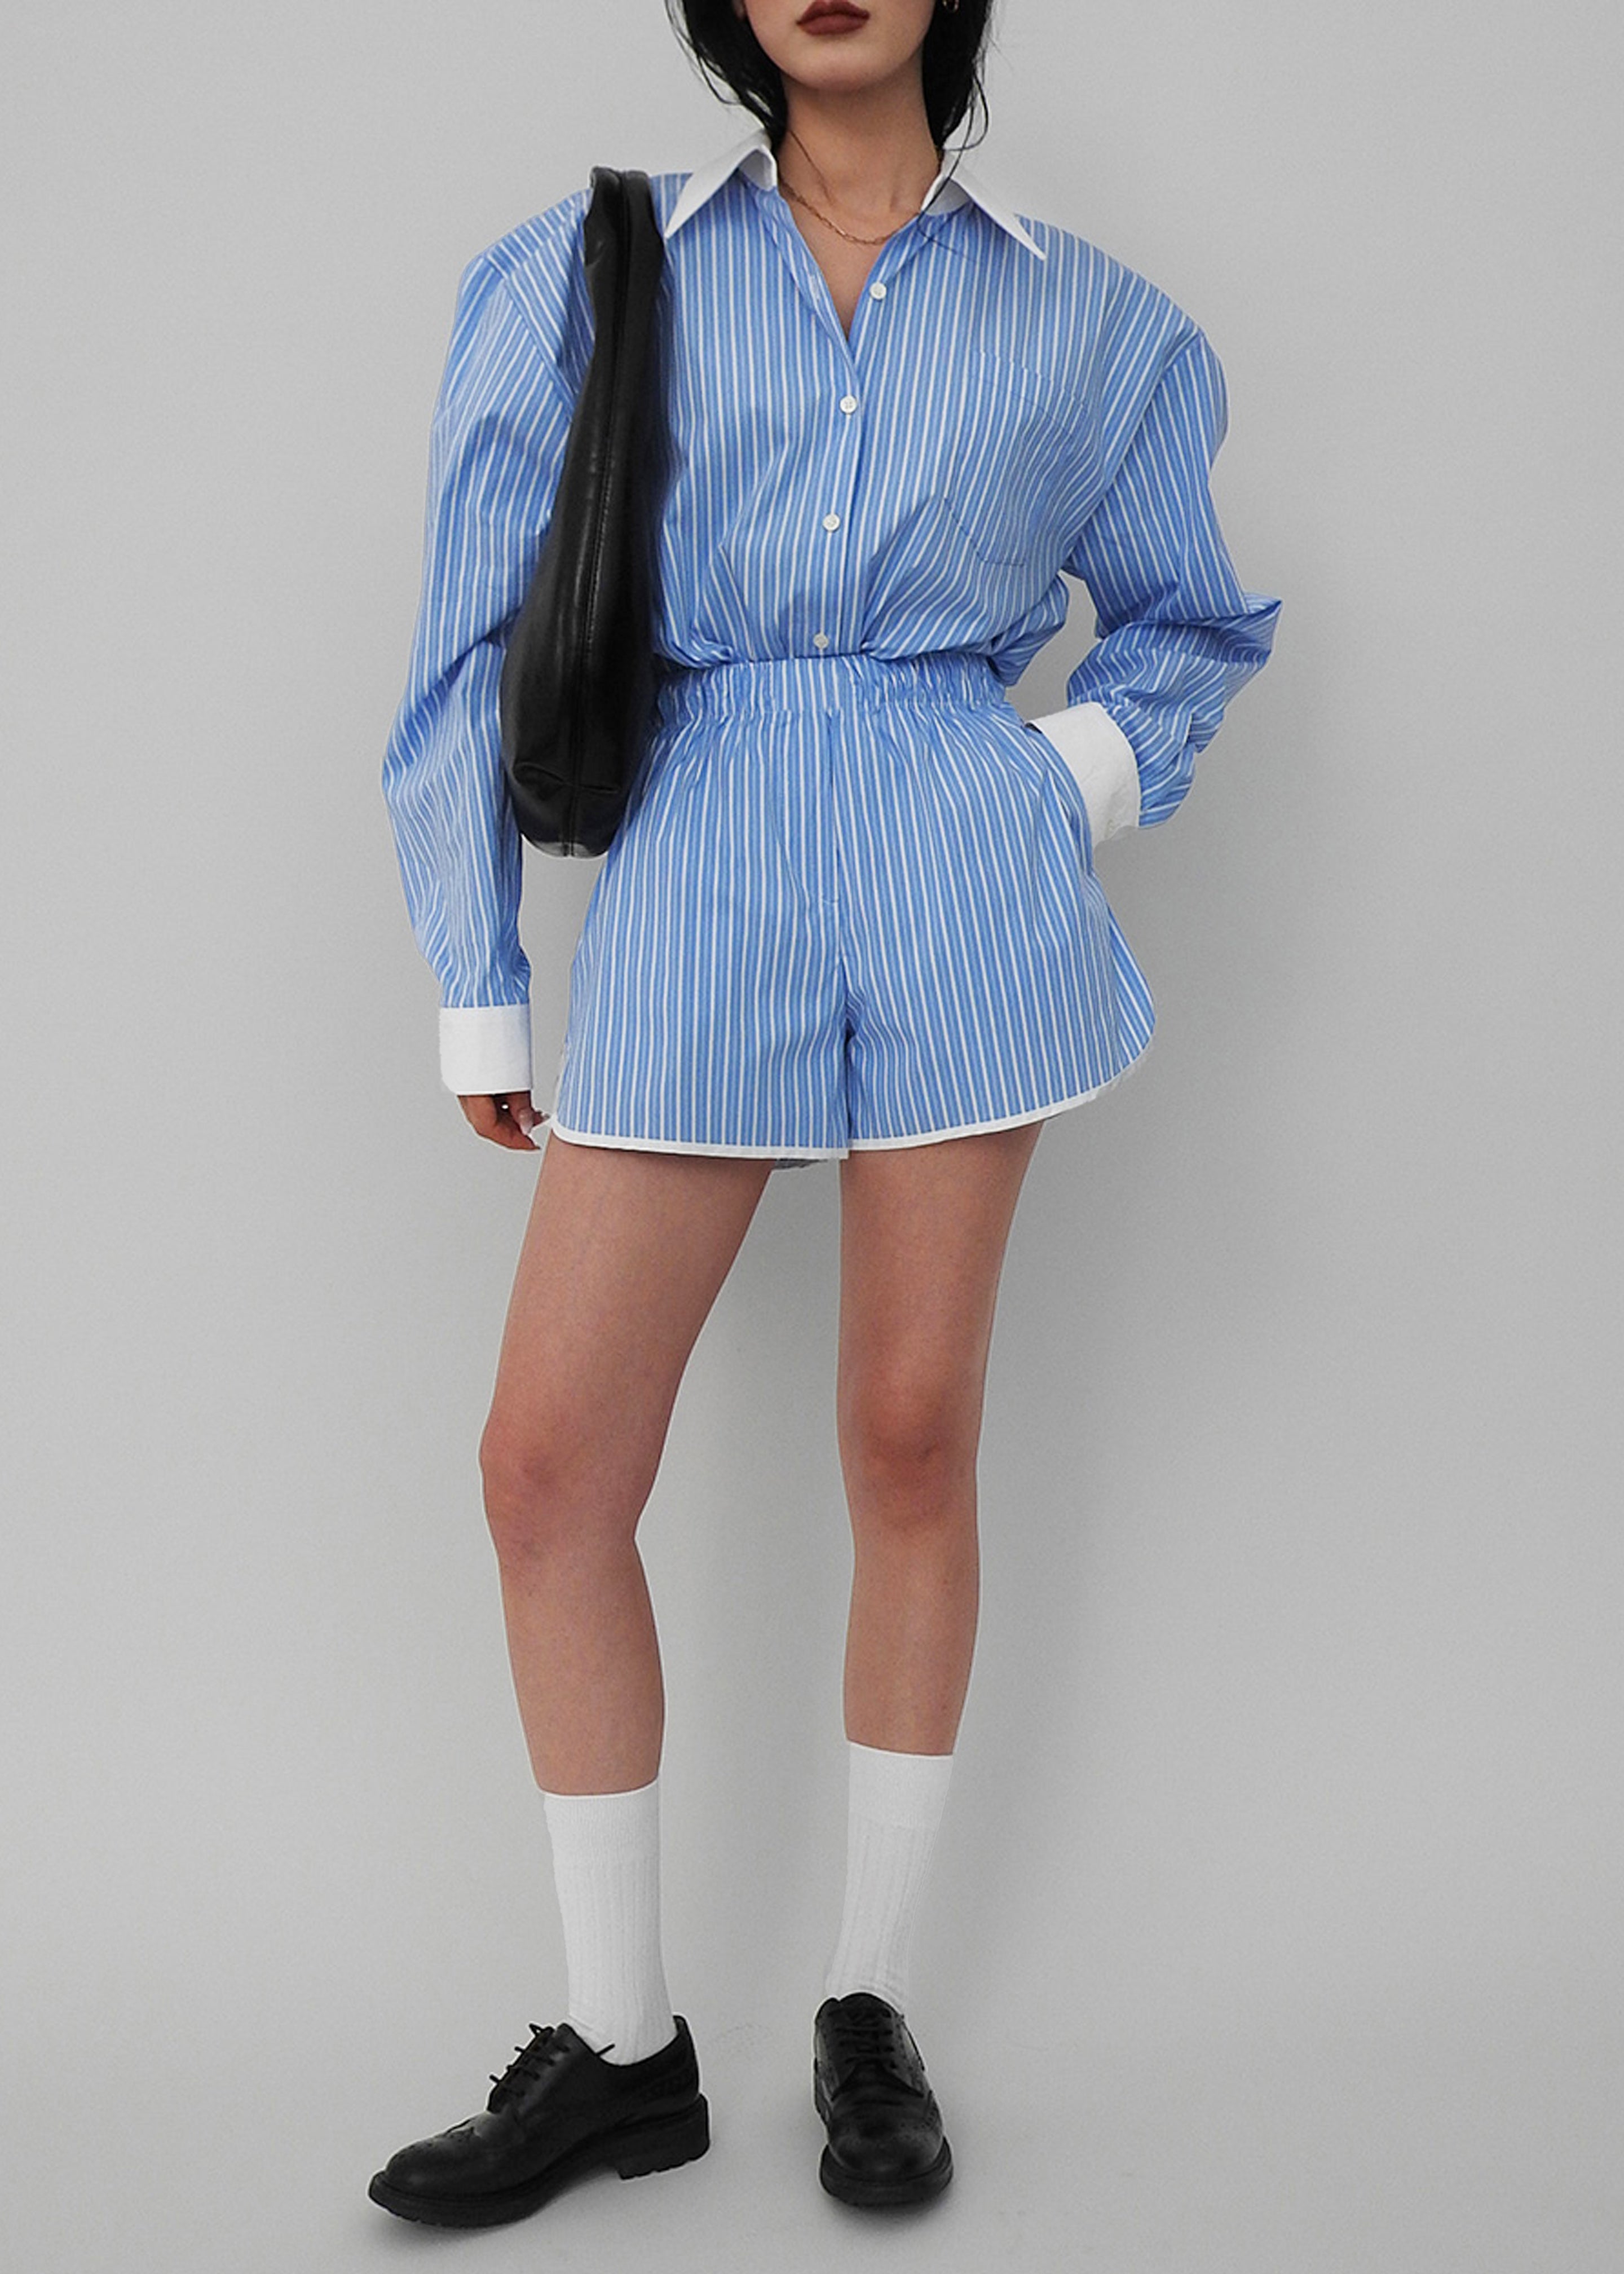 Orla Button Up Shirt - Blue/White Stripe - 1